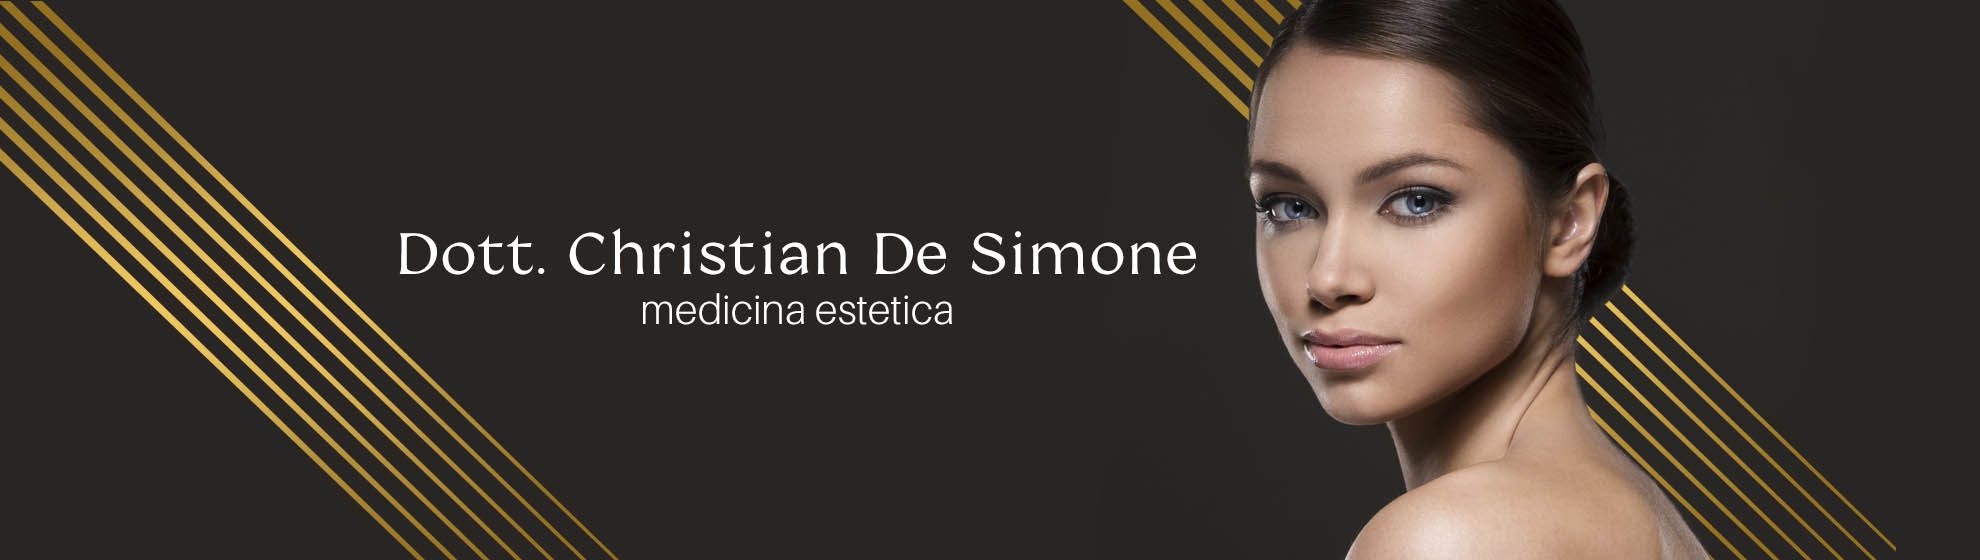 Dott. Christian De Simone